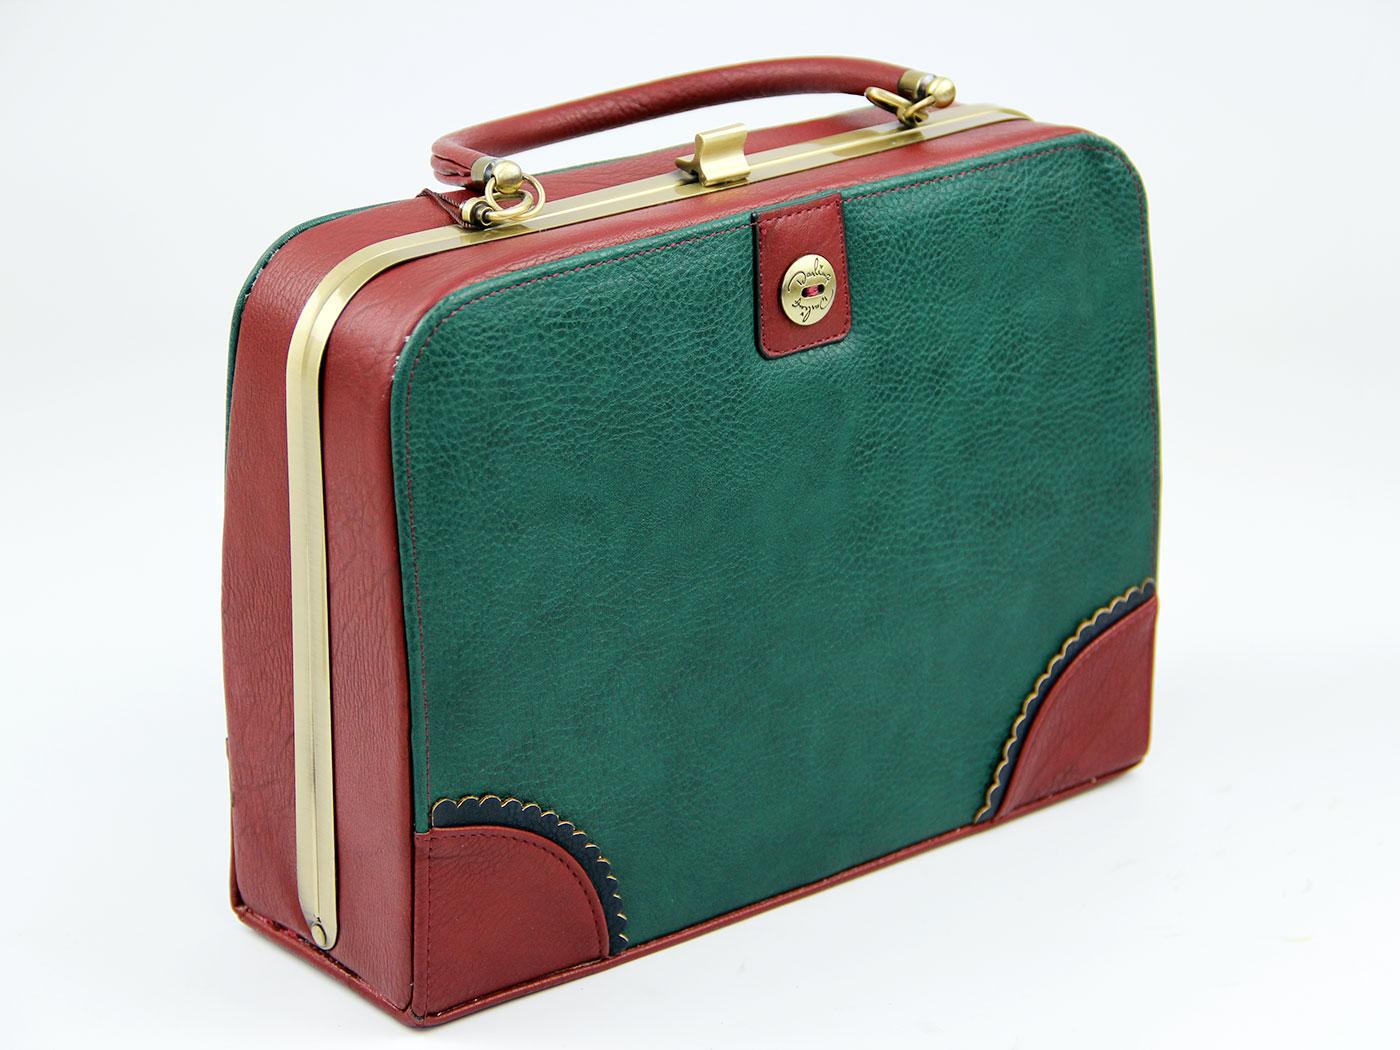 Romi DARLING Retro 60s Vintage Travel Handbag (B)